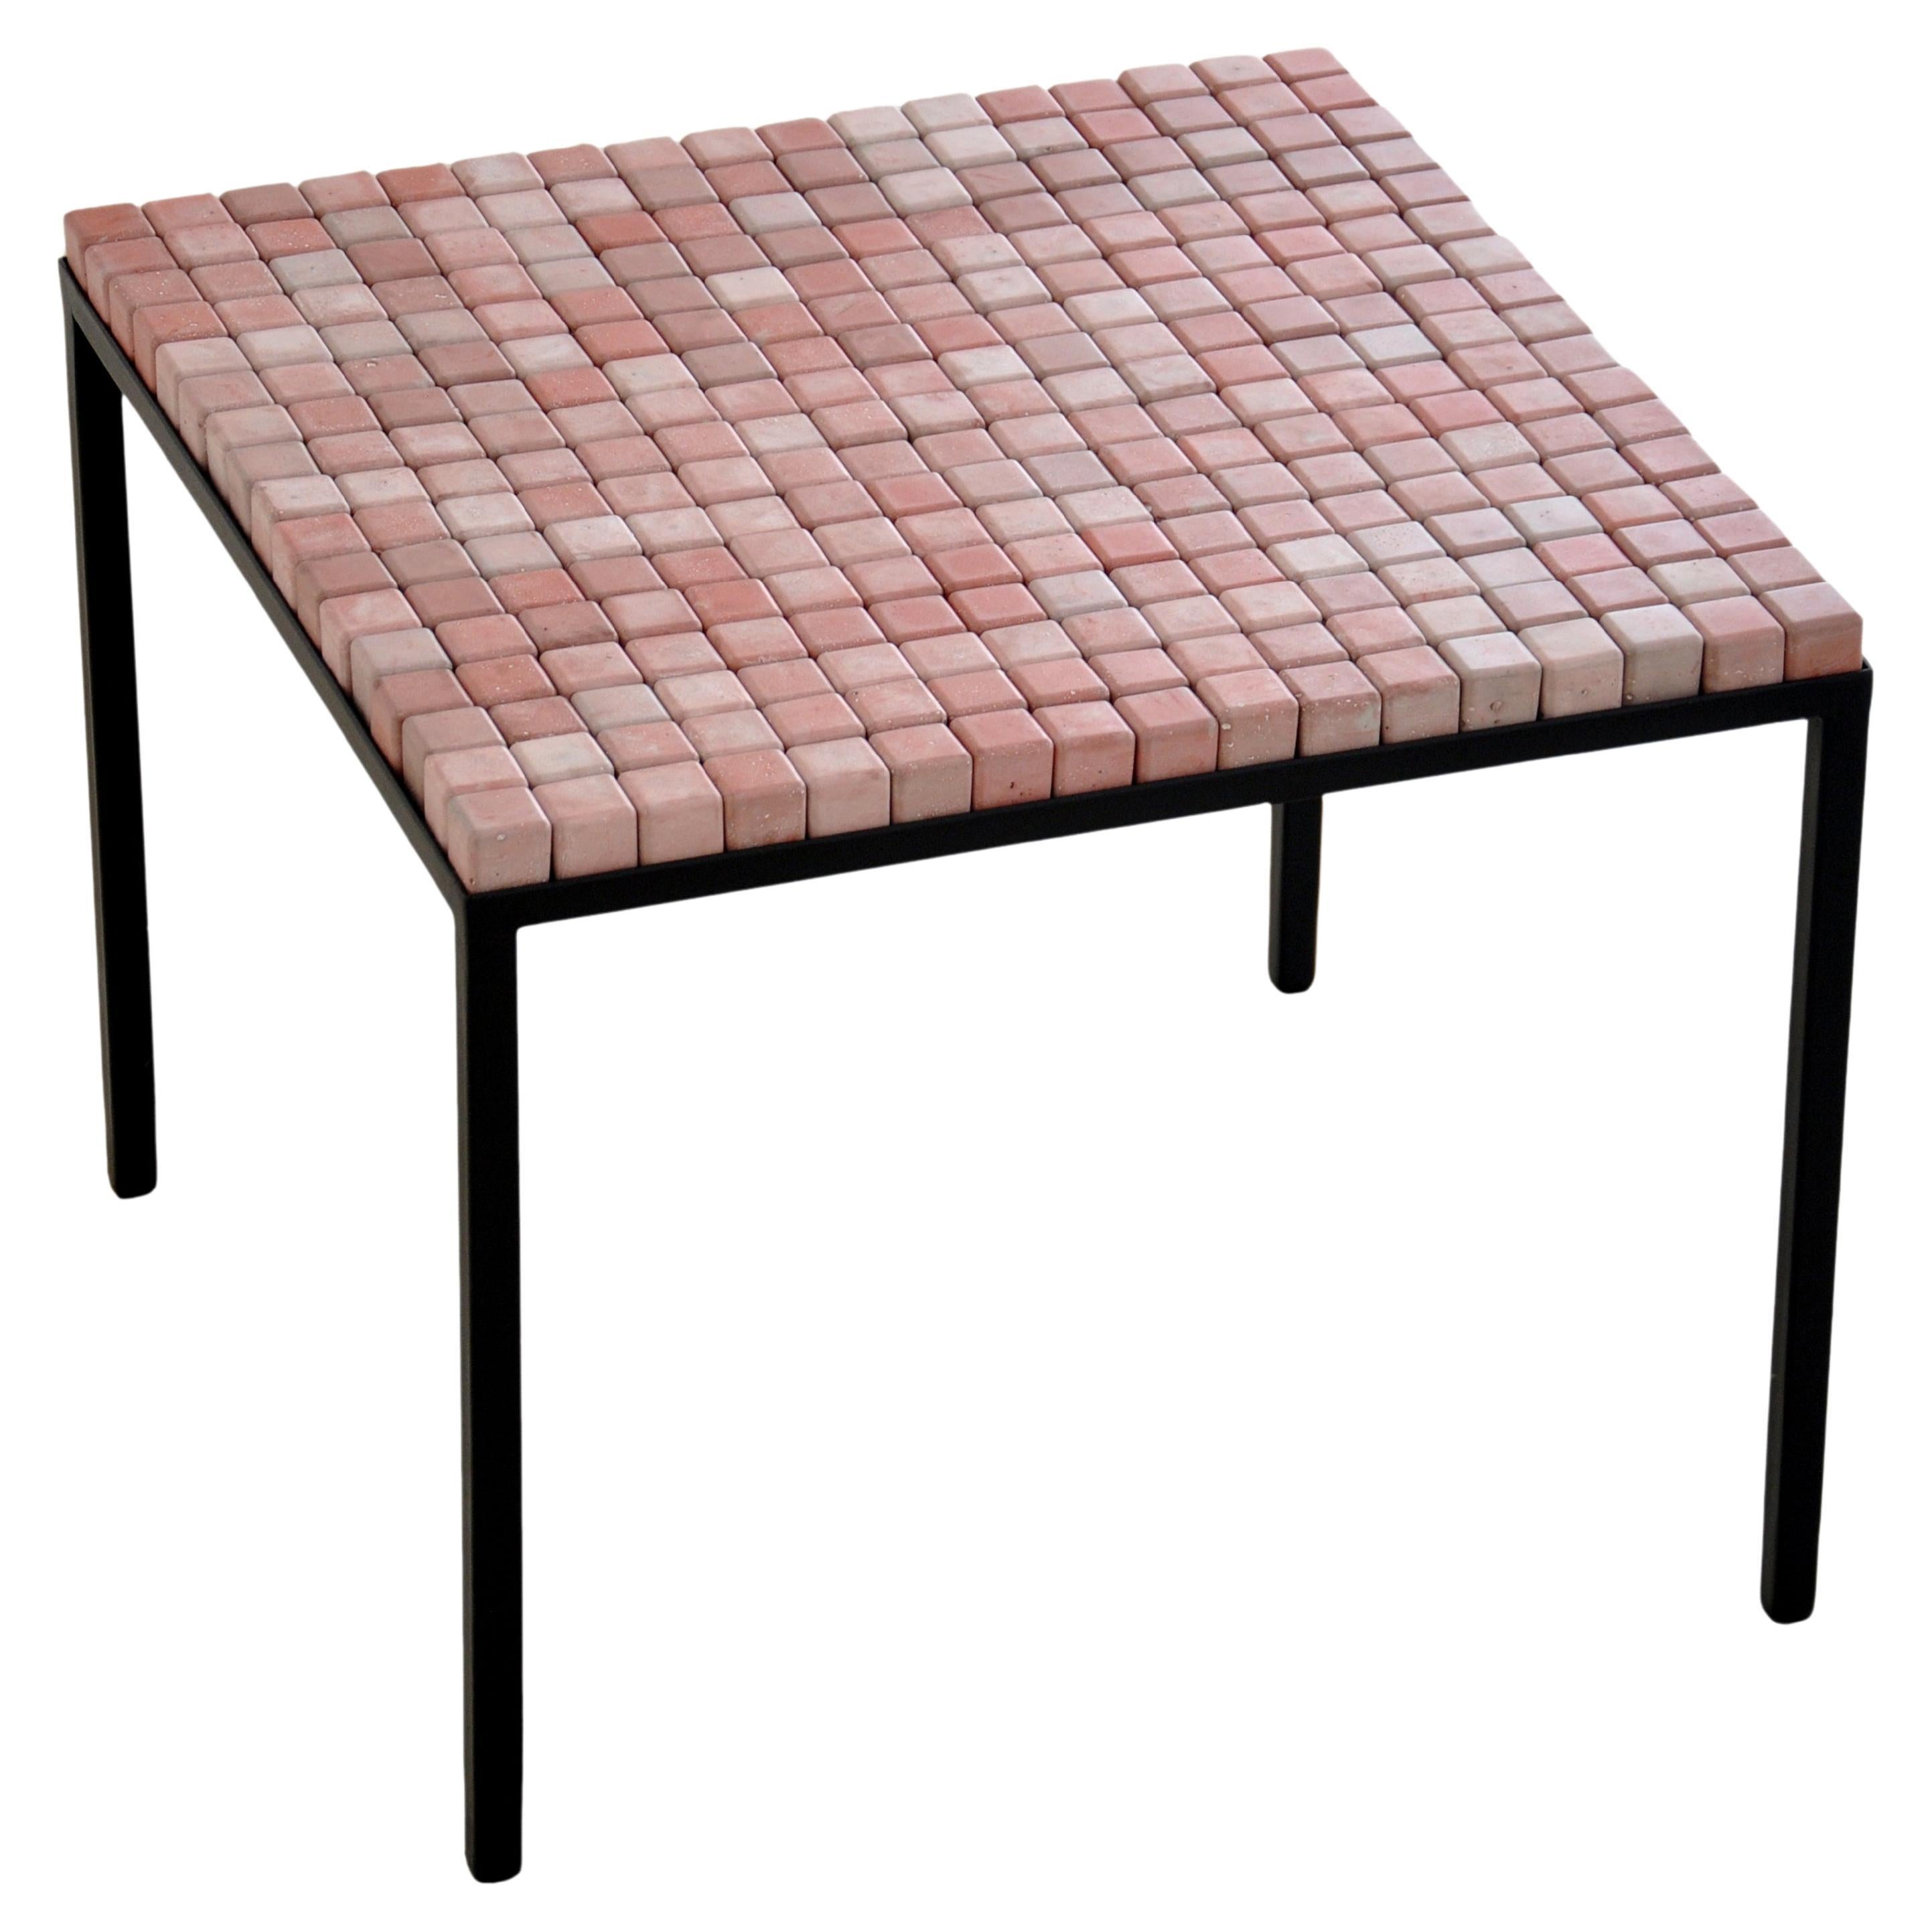 Concrete Red Cube Table by Miriam Loellmann